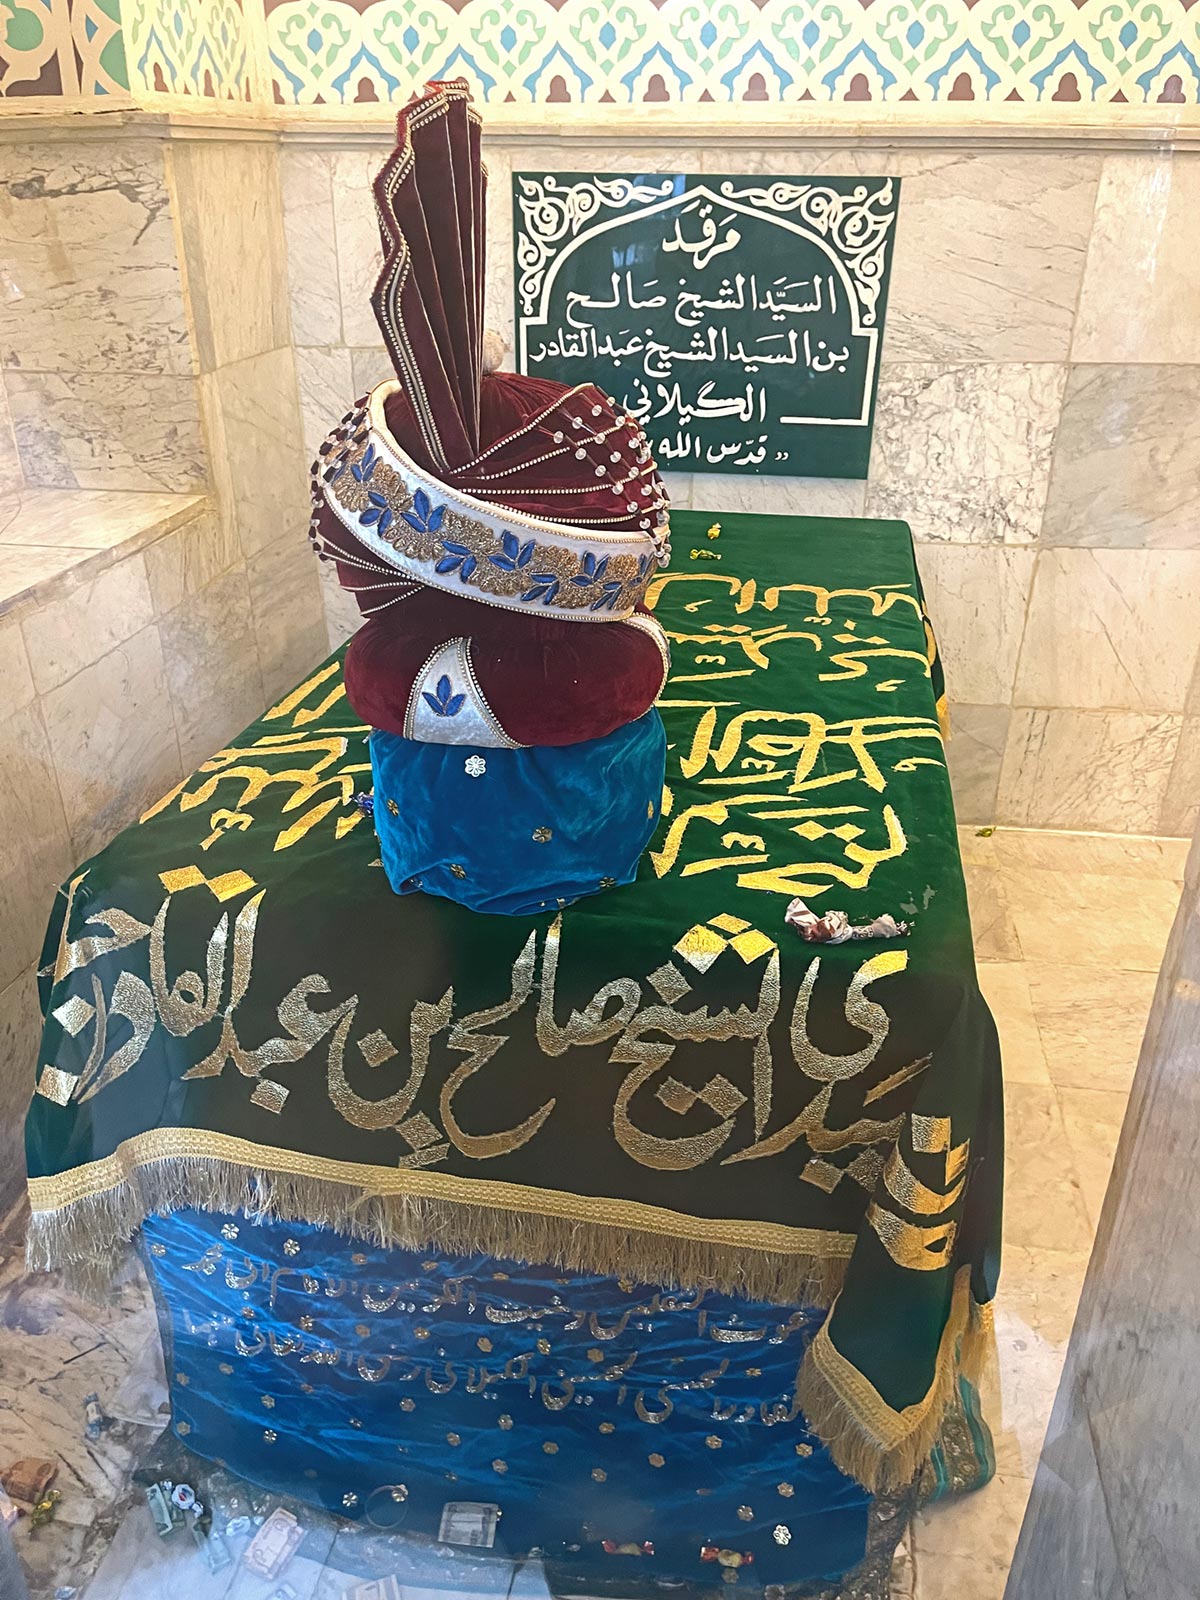 Graf van Sheikh Salih, de zoon van Abdul Qadir Gilani, bij het Mausoleum van Abdul Qadir Gilani, Bagdad